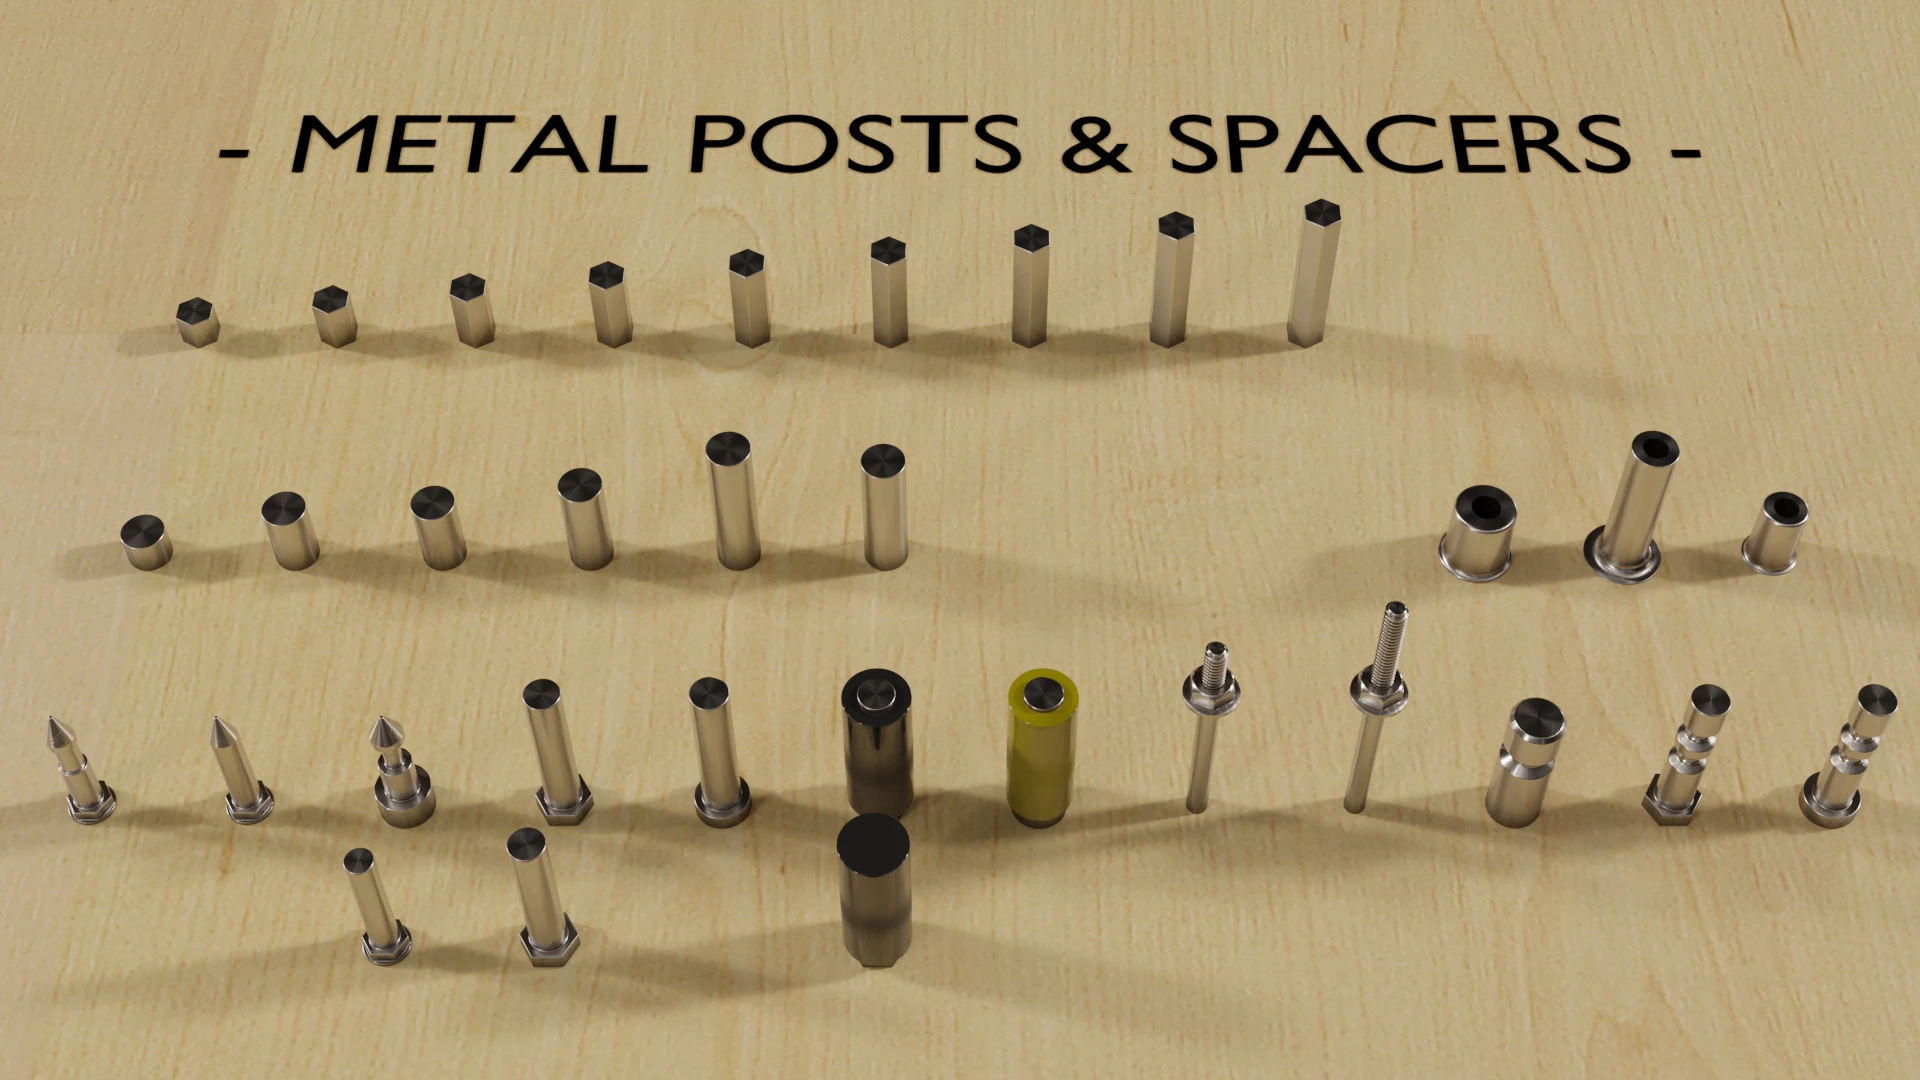 Metal posts